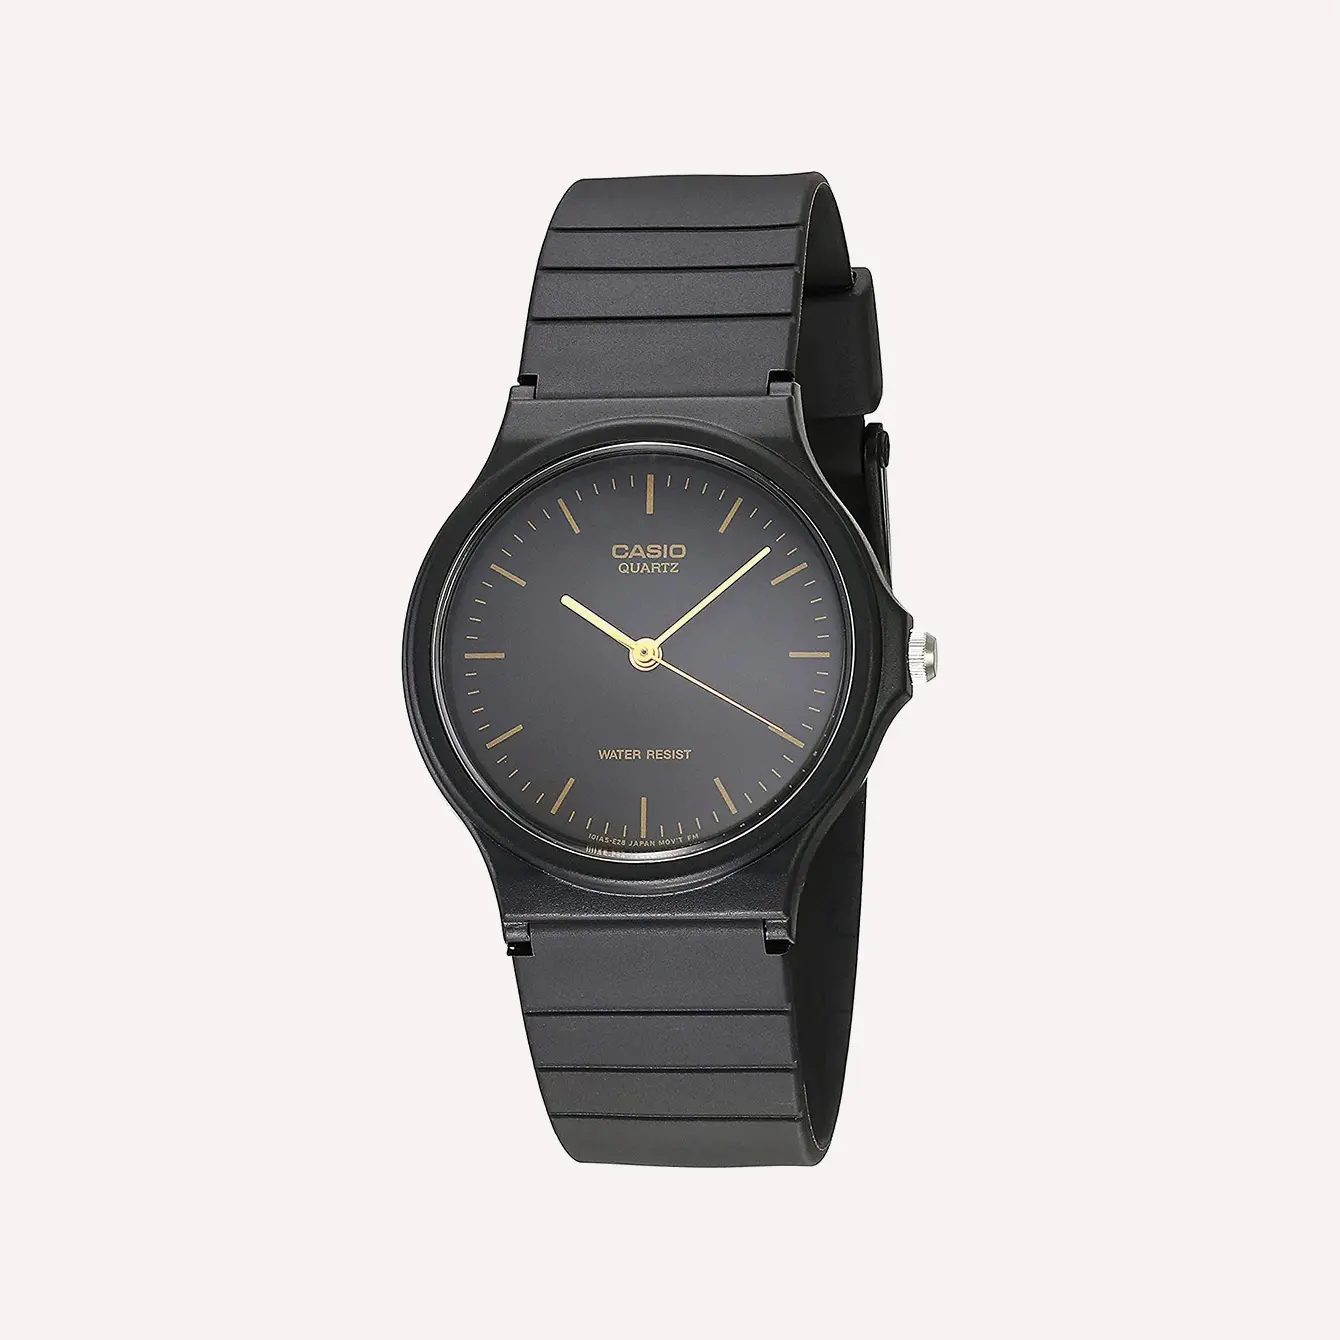 Casio Men s MQ24 1E Black Resin Quartz Watch with Black Dial